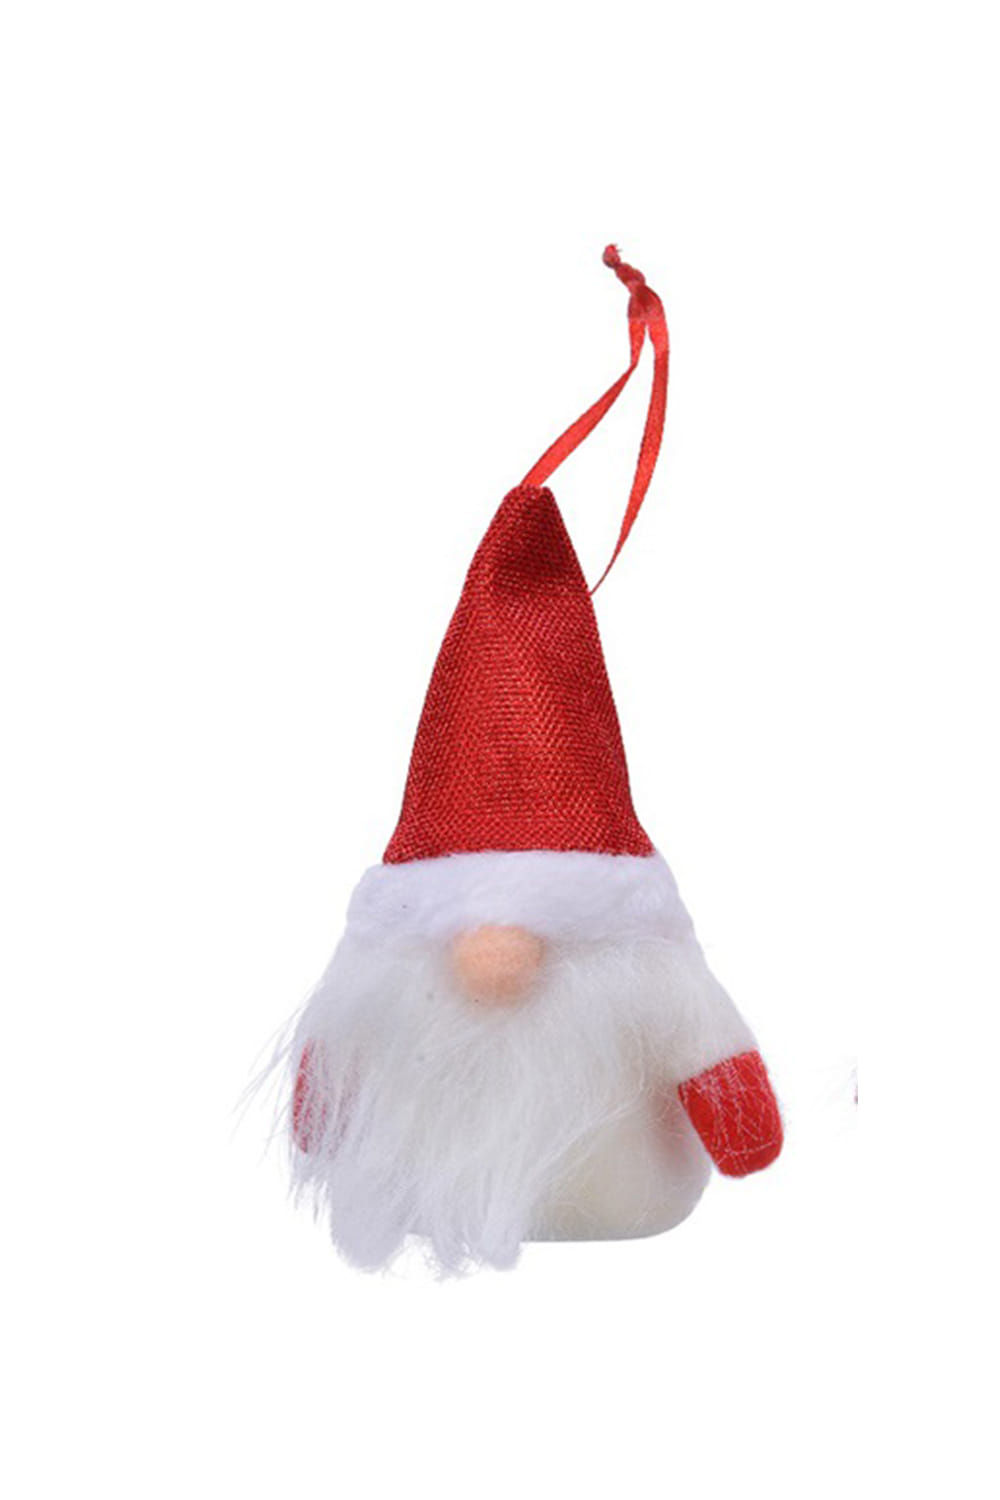 Athome Pavloudakis - Χριστουγεννιάτικος συνθετικός νάνος με κόκκινο σκουφάκι (11 cm)